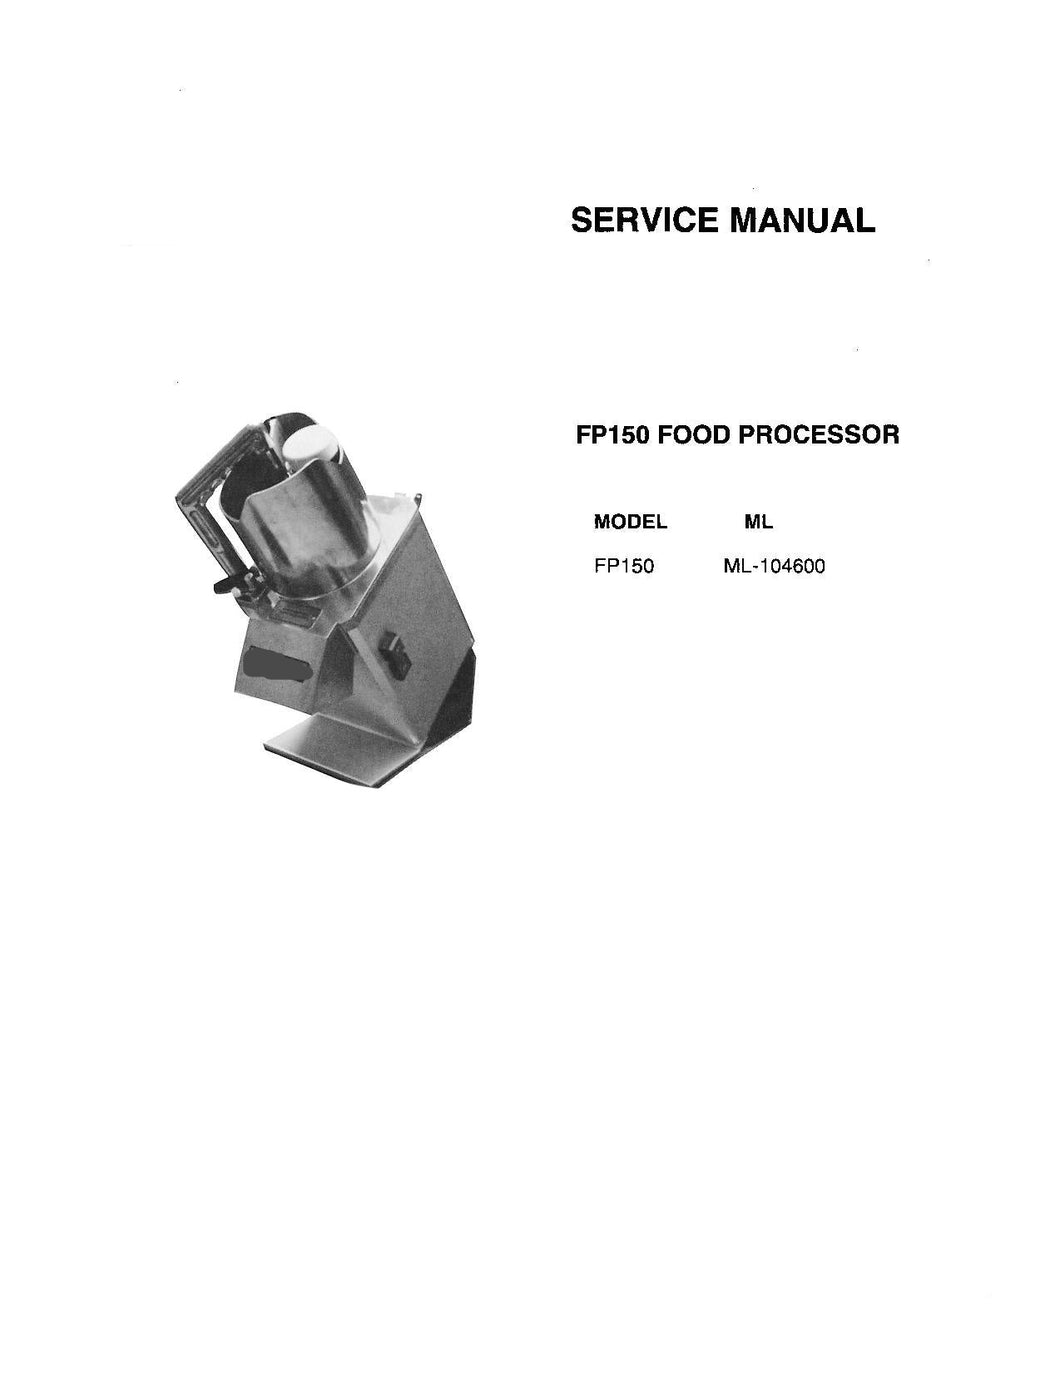 HOBART MODEL FP150 FOOD PROCESSOR SERVICE, TECHNICAL AND REPAIR MANUALS PDF